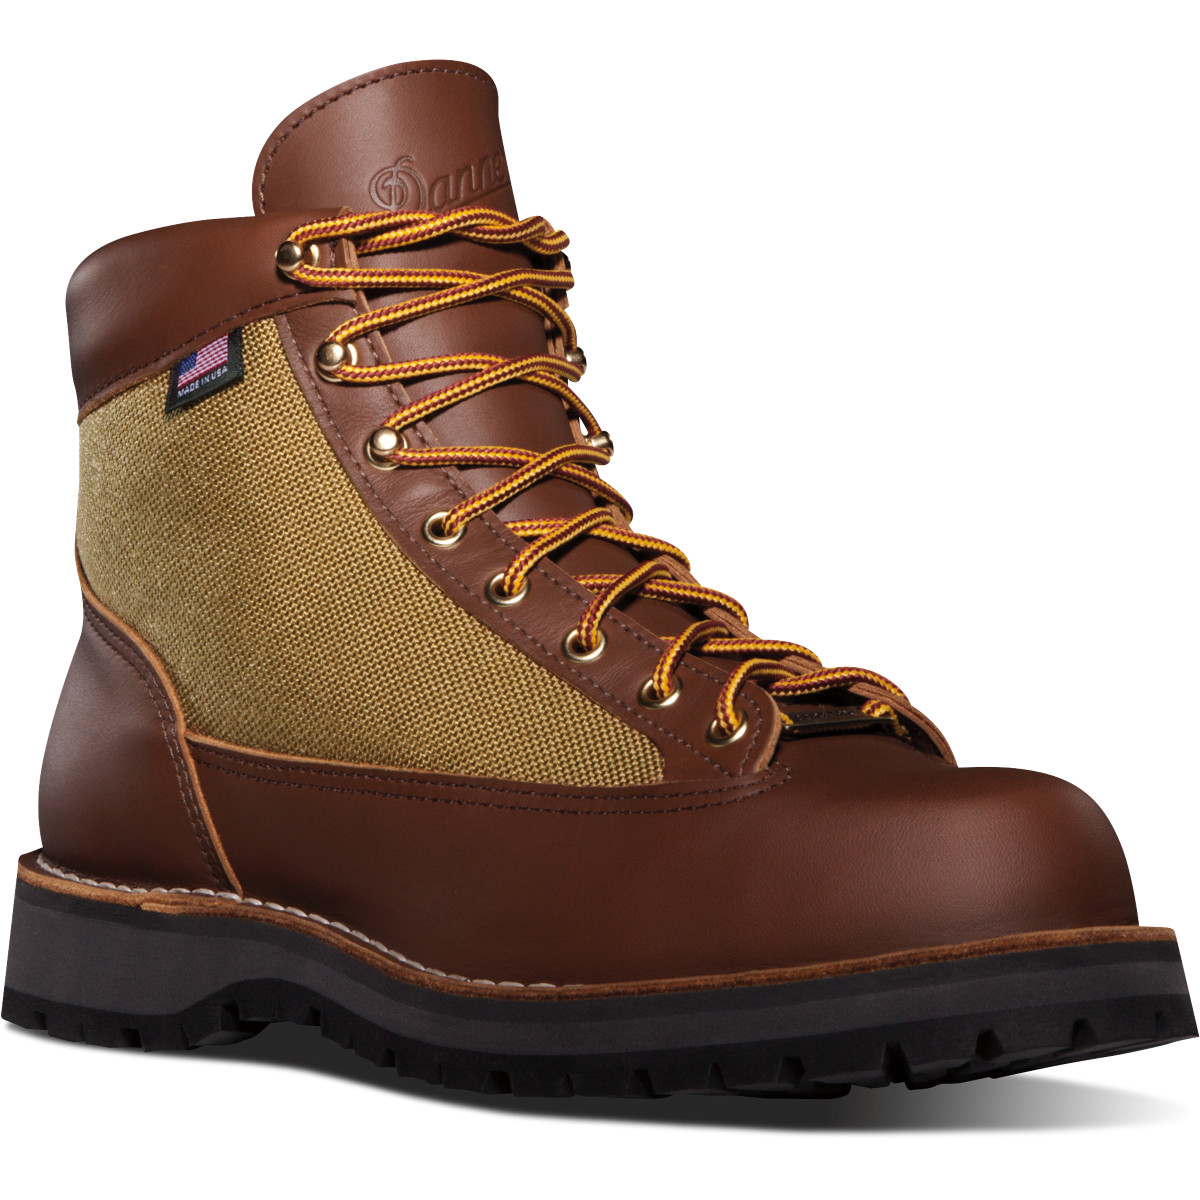 Danner Mens Light Hiking Boots Brown - FDR412095